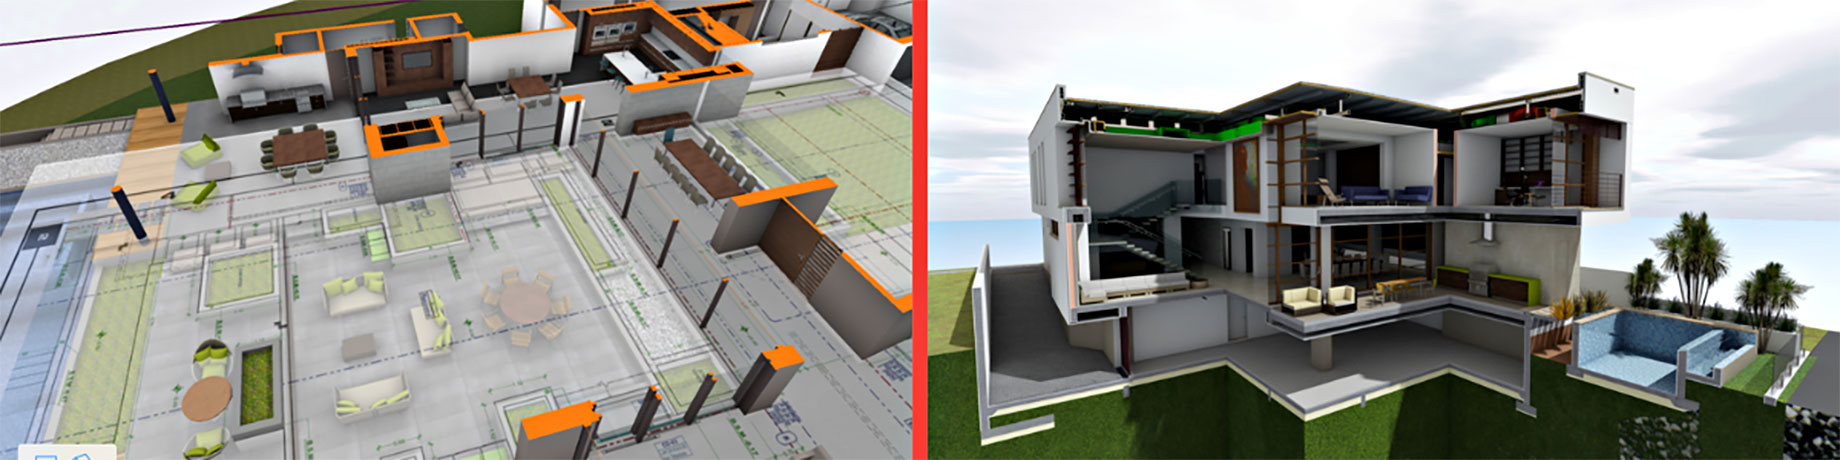 3D Blueprint Render of Home Construction